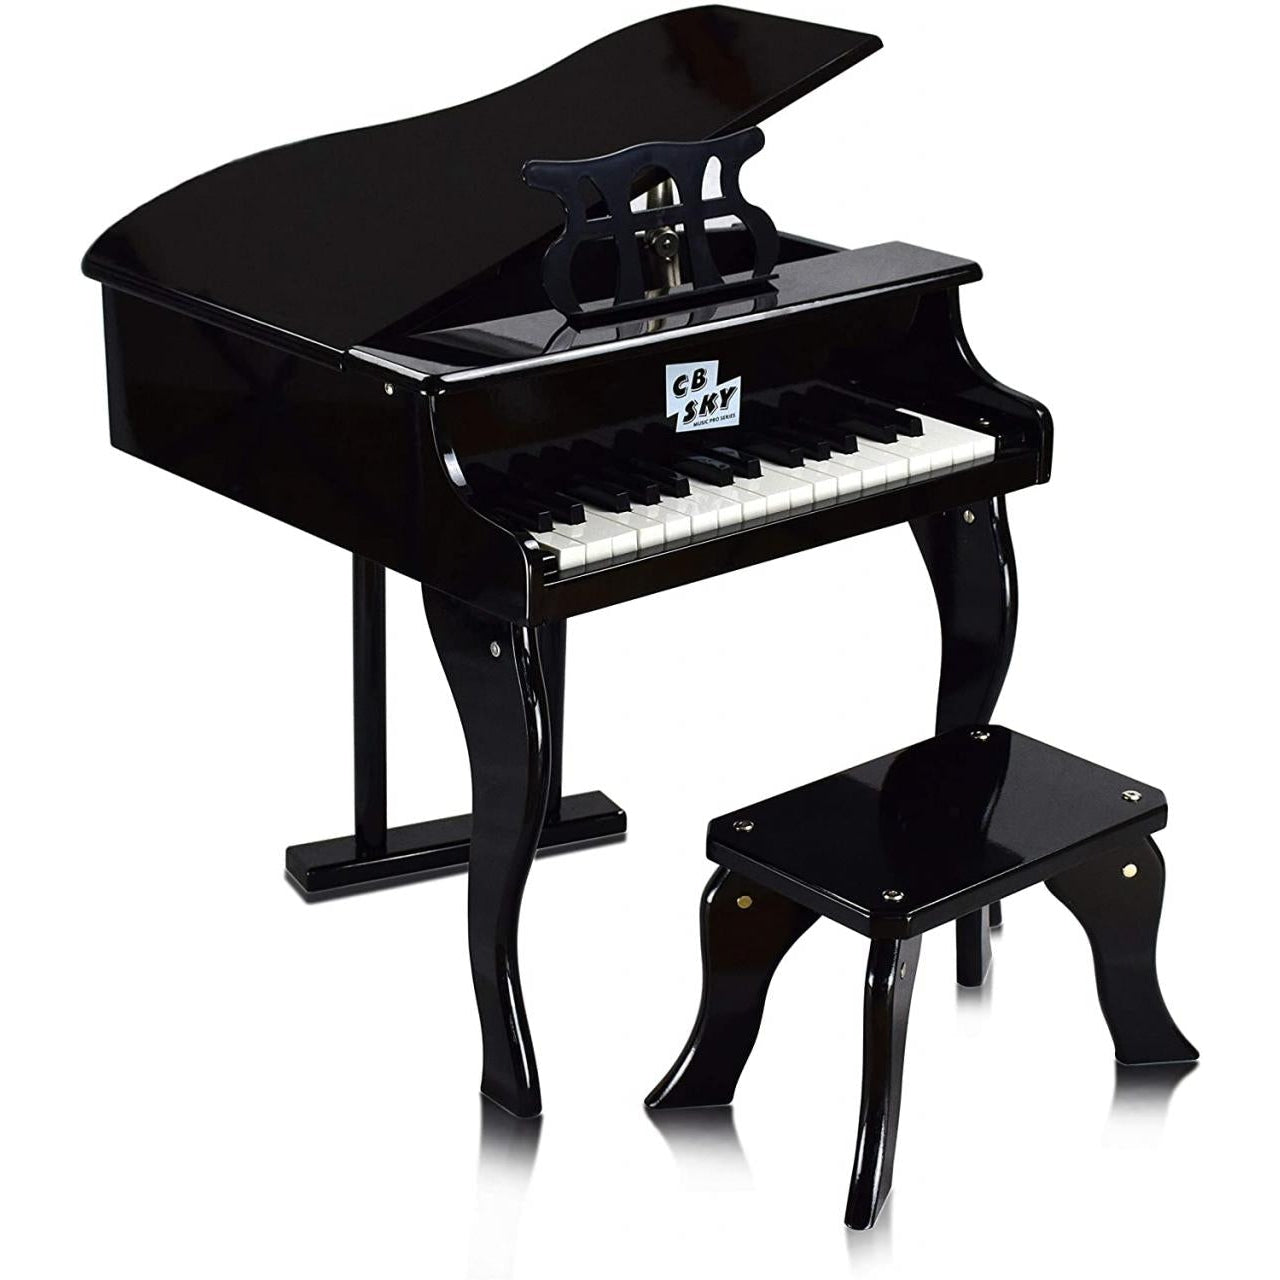 CB Sky - Banquette Piano et Clavier